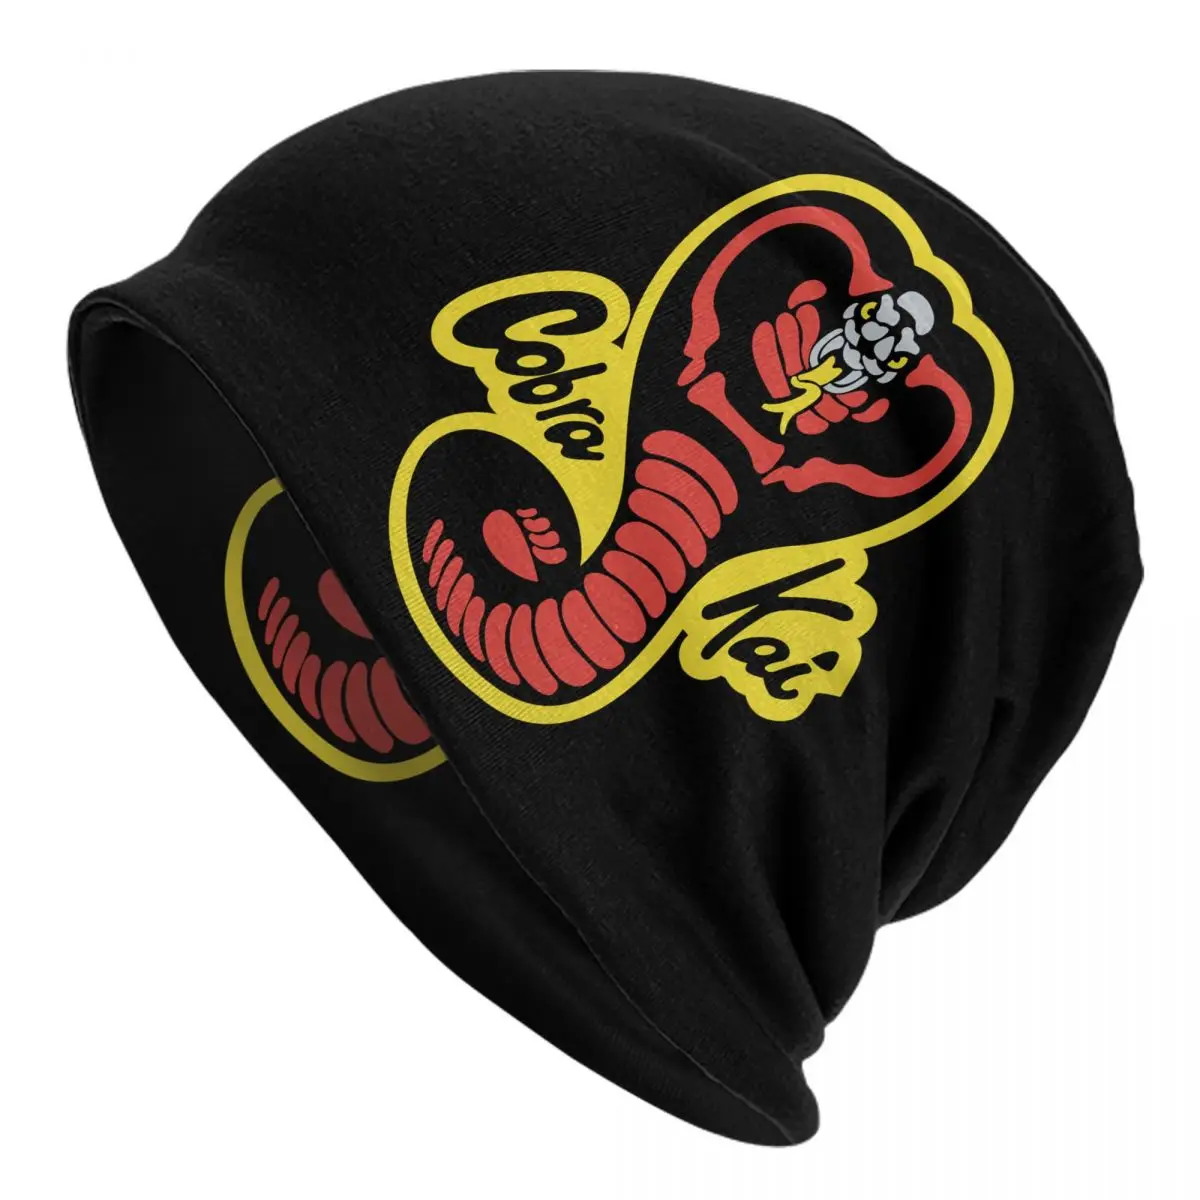 Cobra Kai Adult Men's Women's Knit Hat Keep warm winter Funny knitted hat